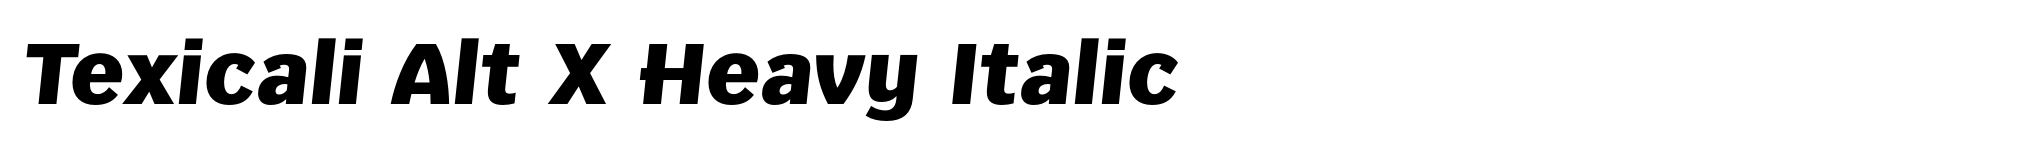 Texicali Alt X Heavy Italic image